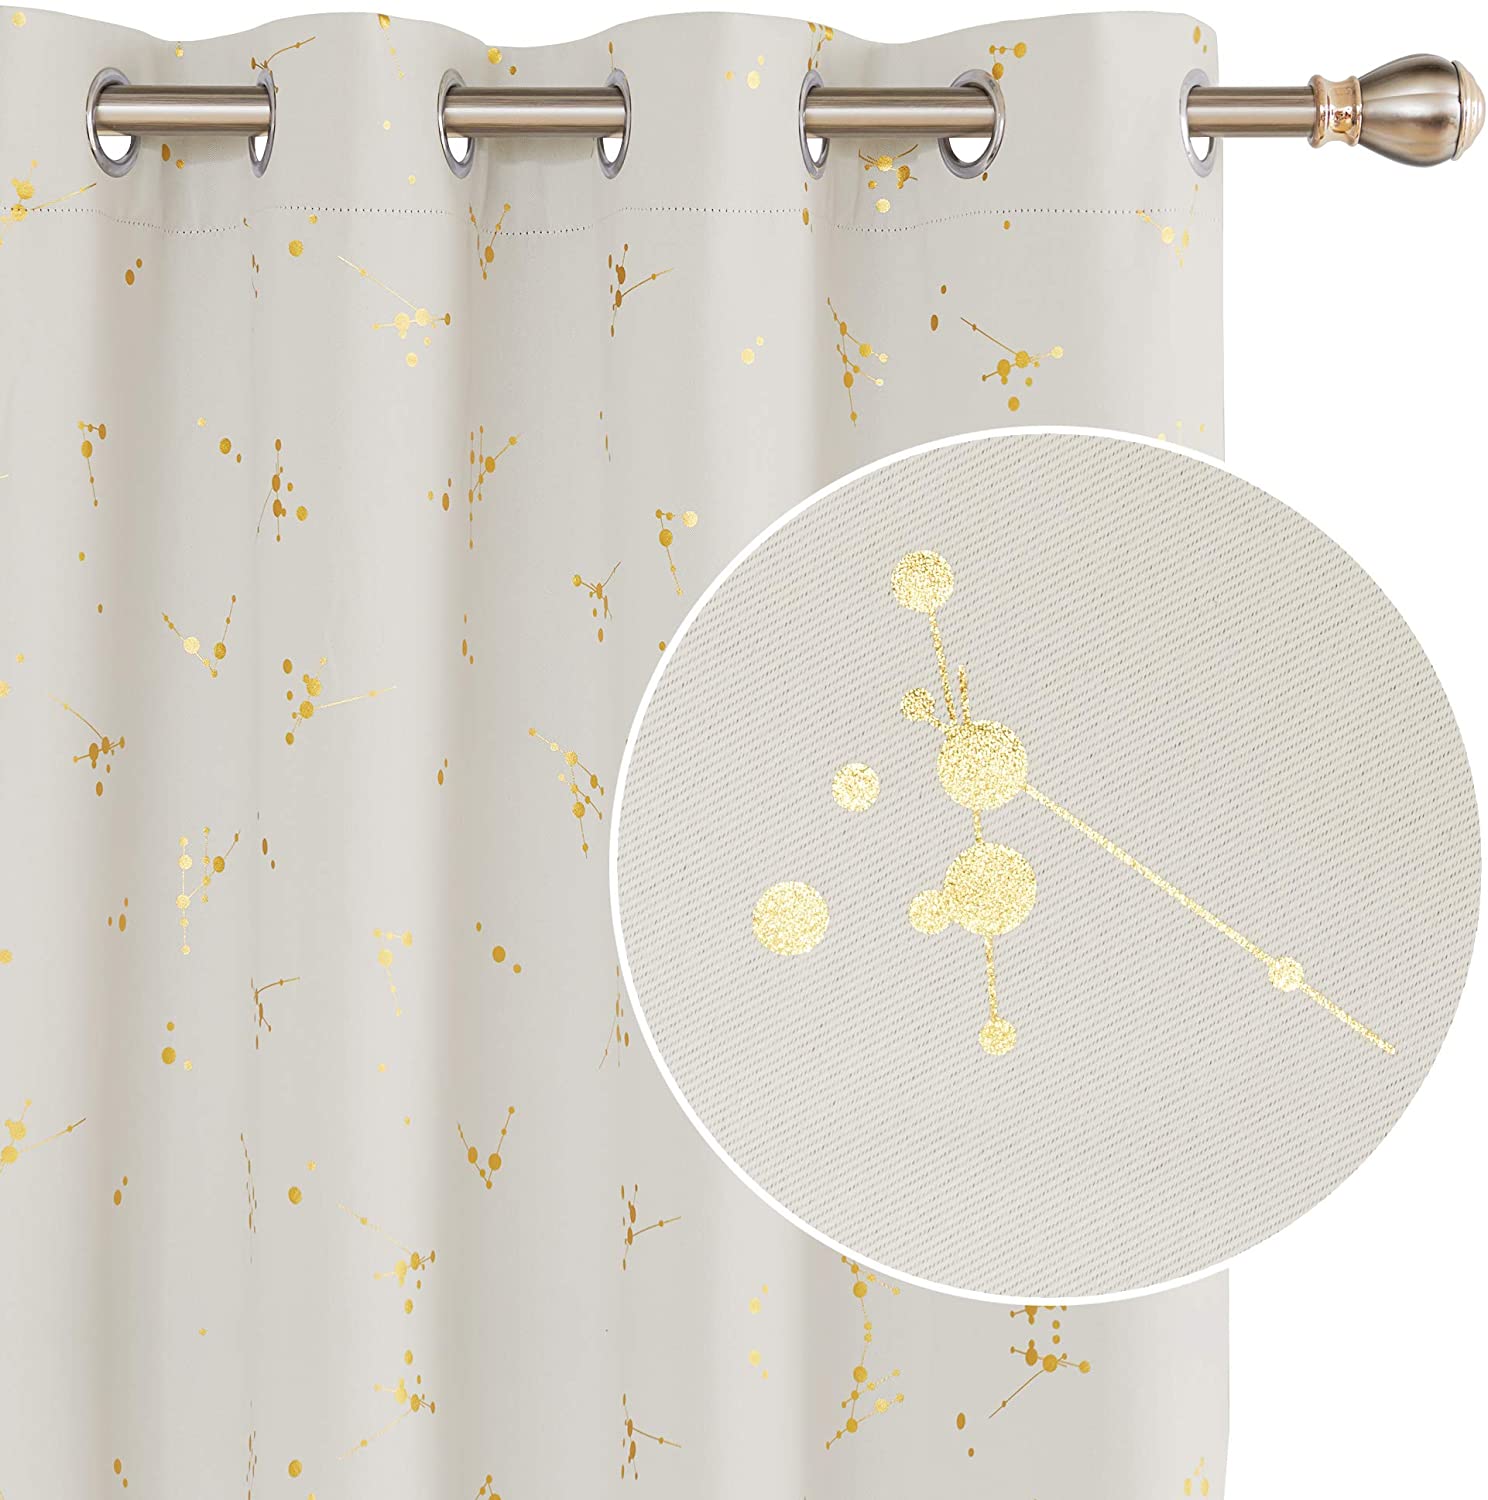 7. DECONOVO Constellation Pattern Foil Printed Curtain Closet Curtains